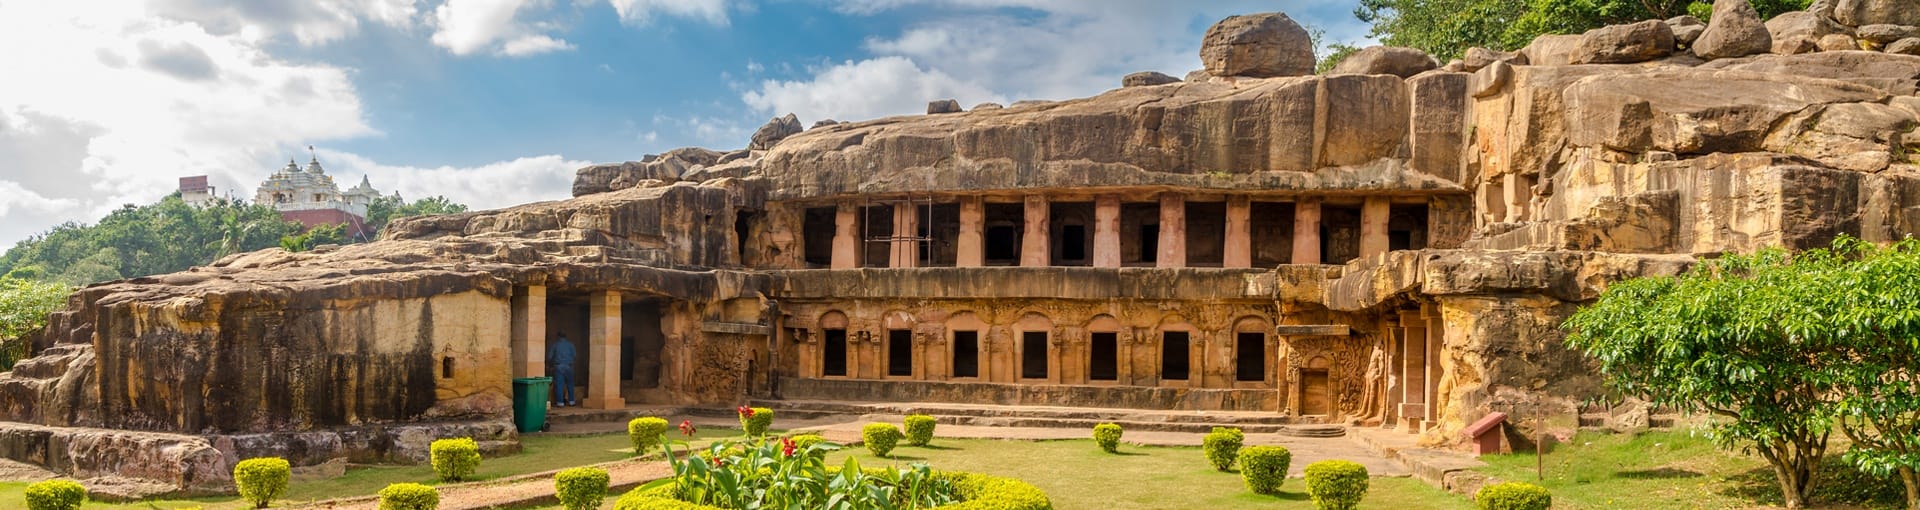 rani-gumpha-caves-of-udayagiri-bhubaneswar